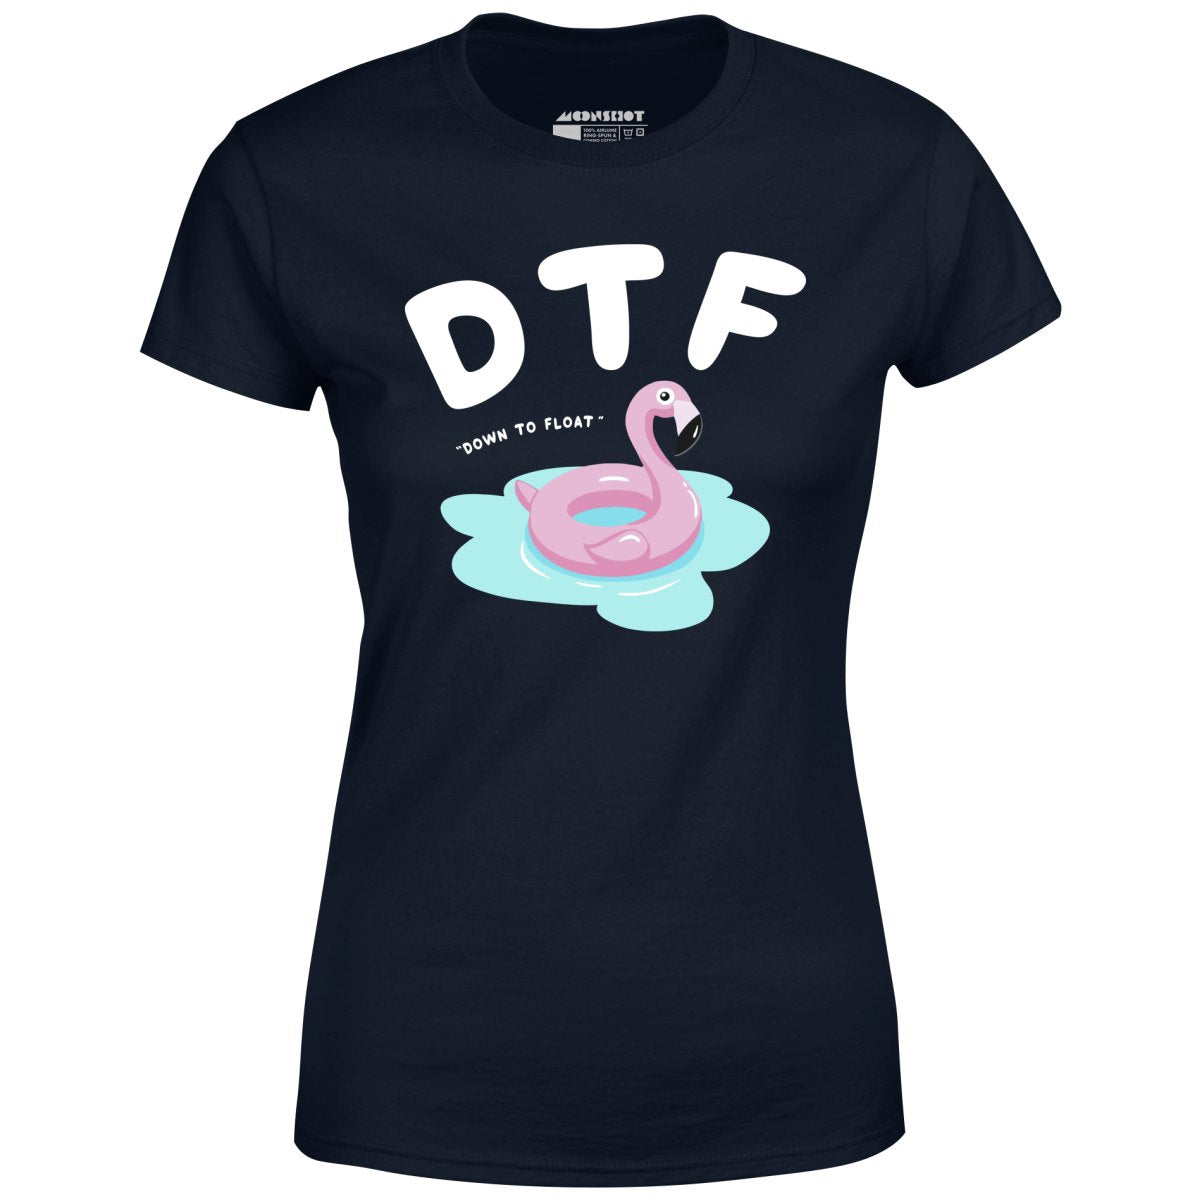 Down to Float - Women's T-Shirt